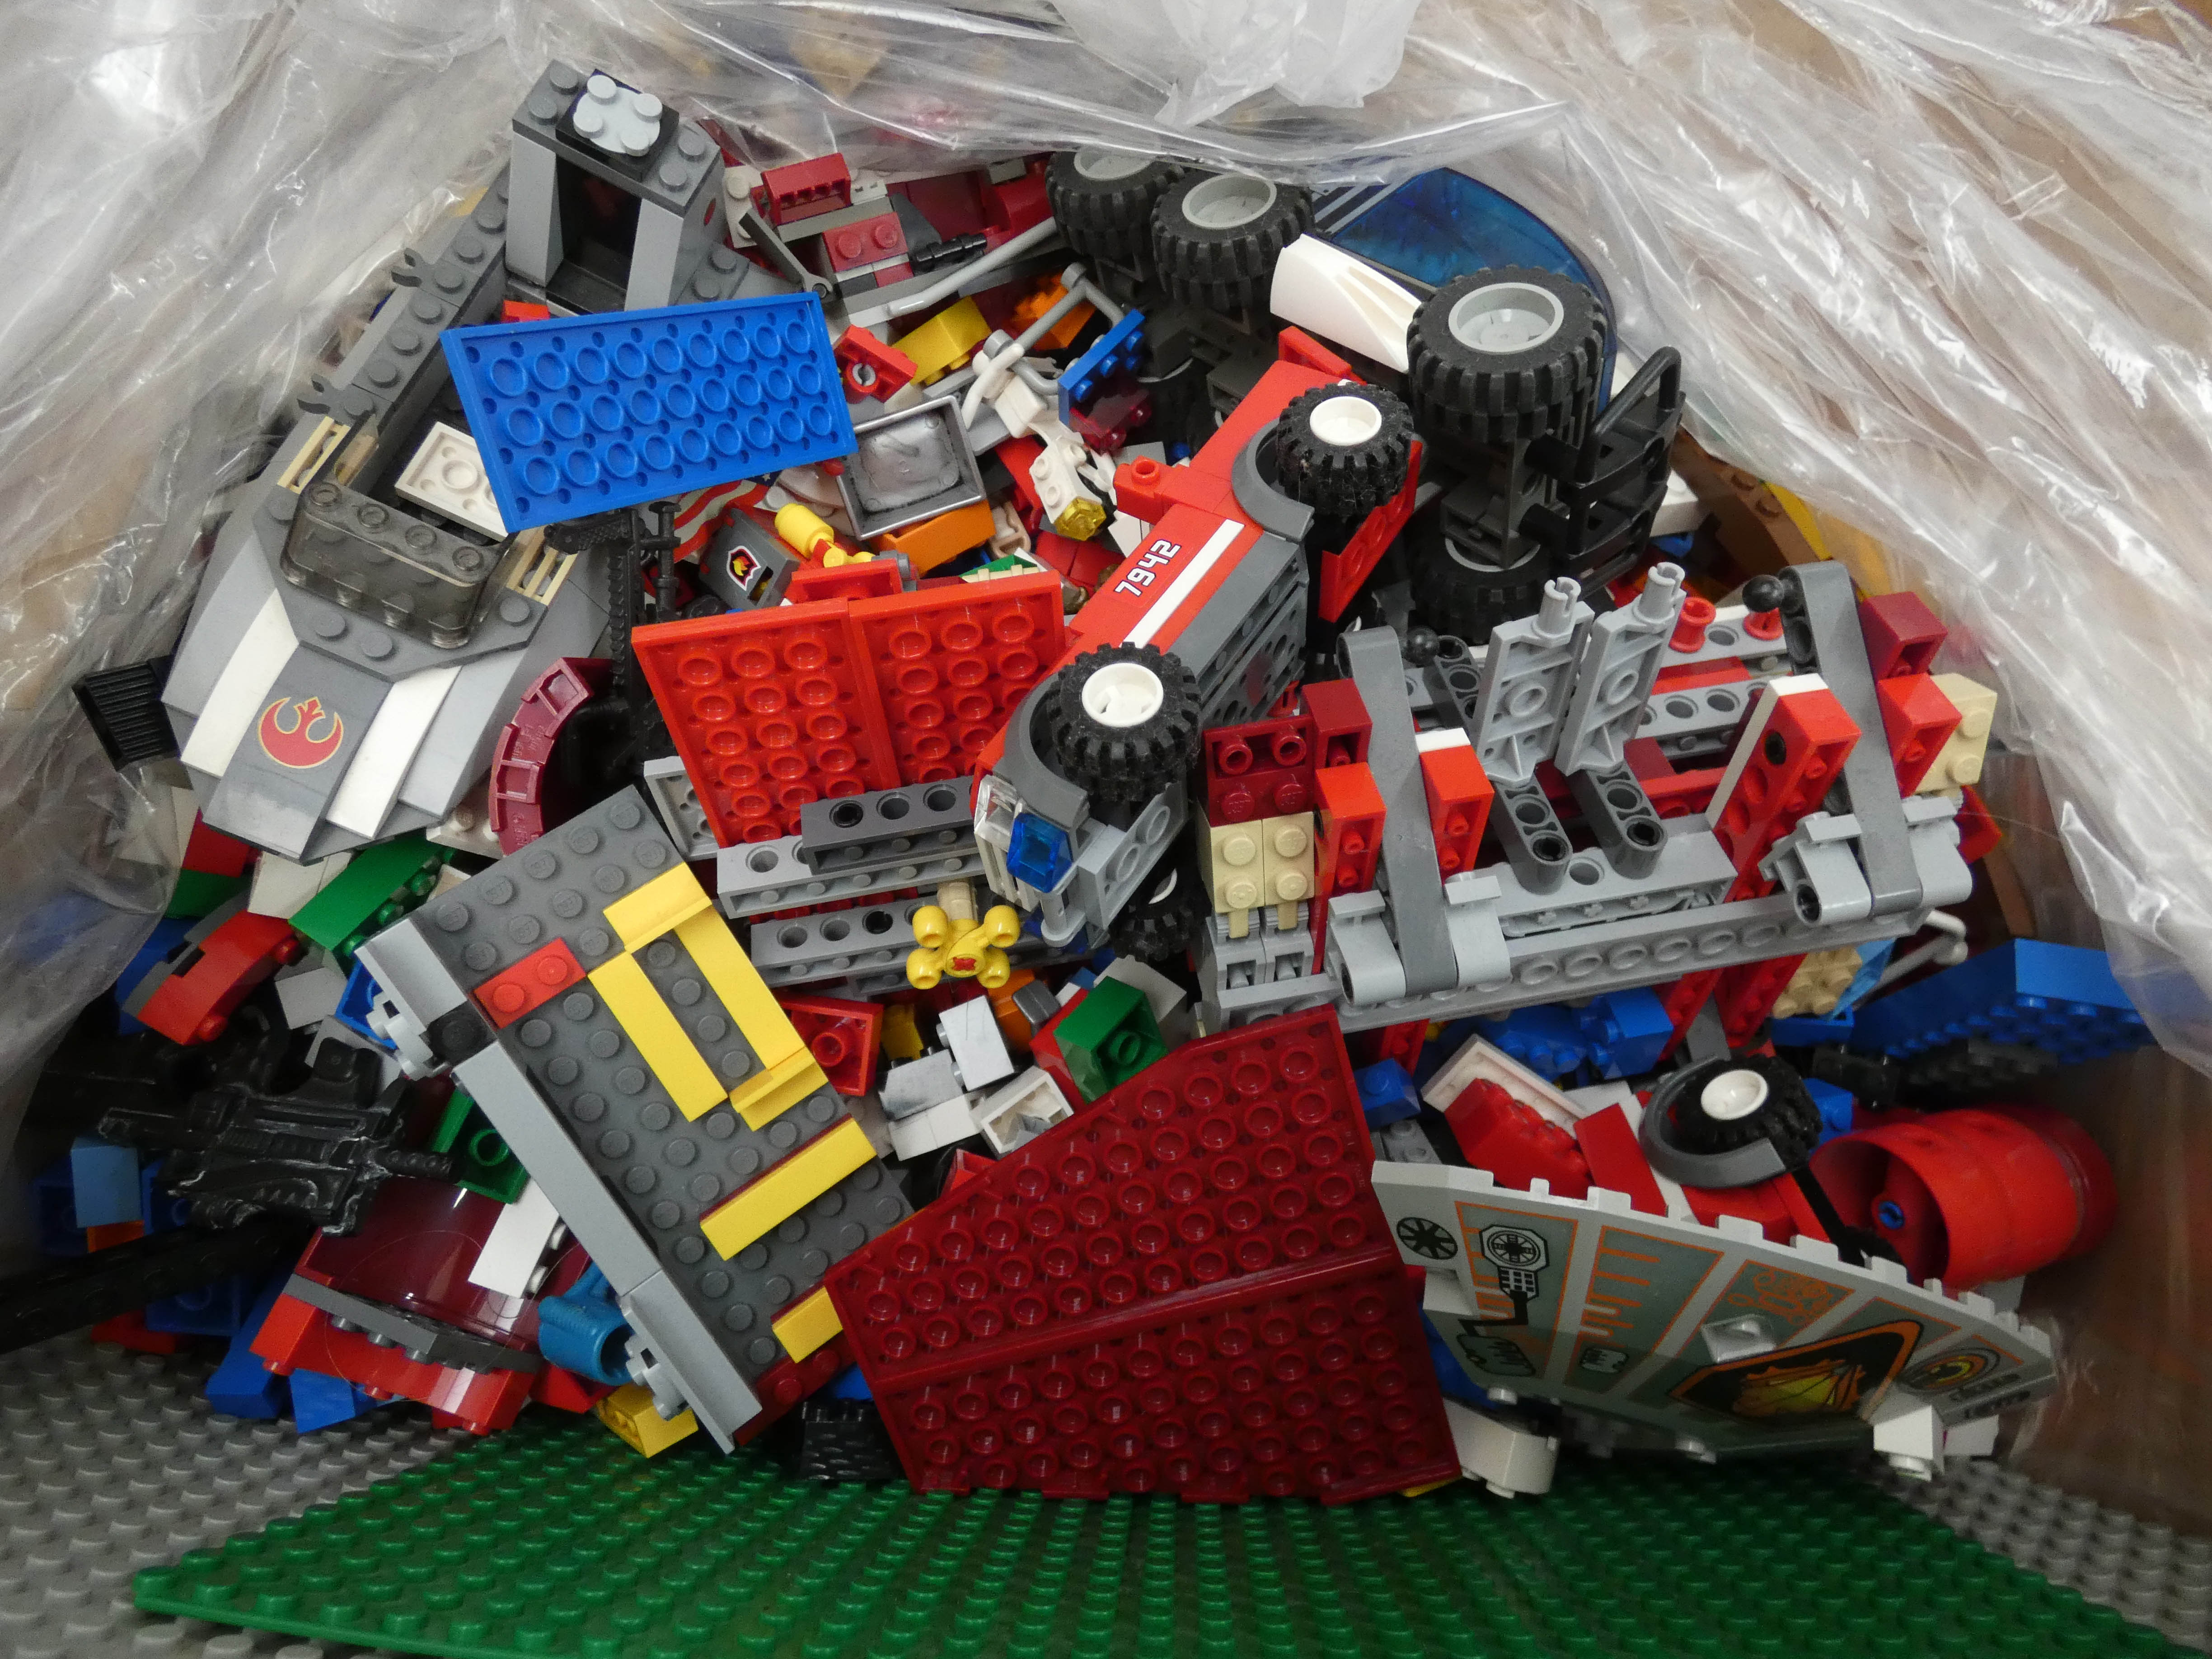 A large box of Lego